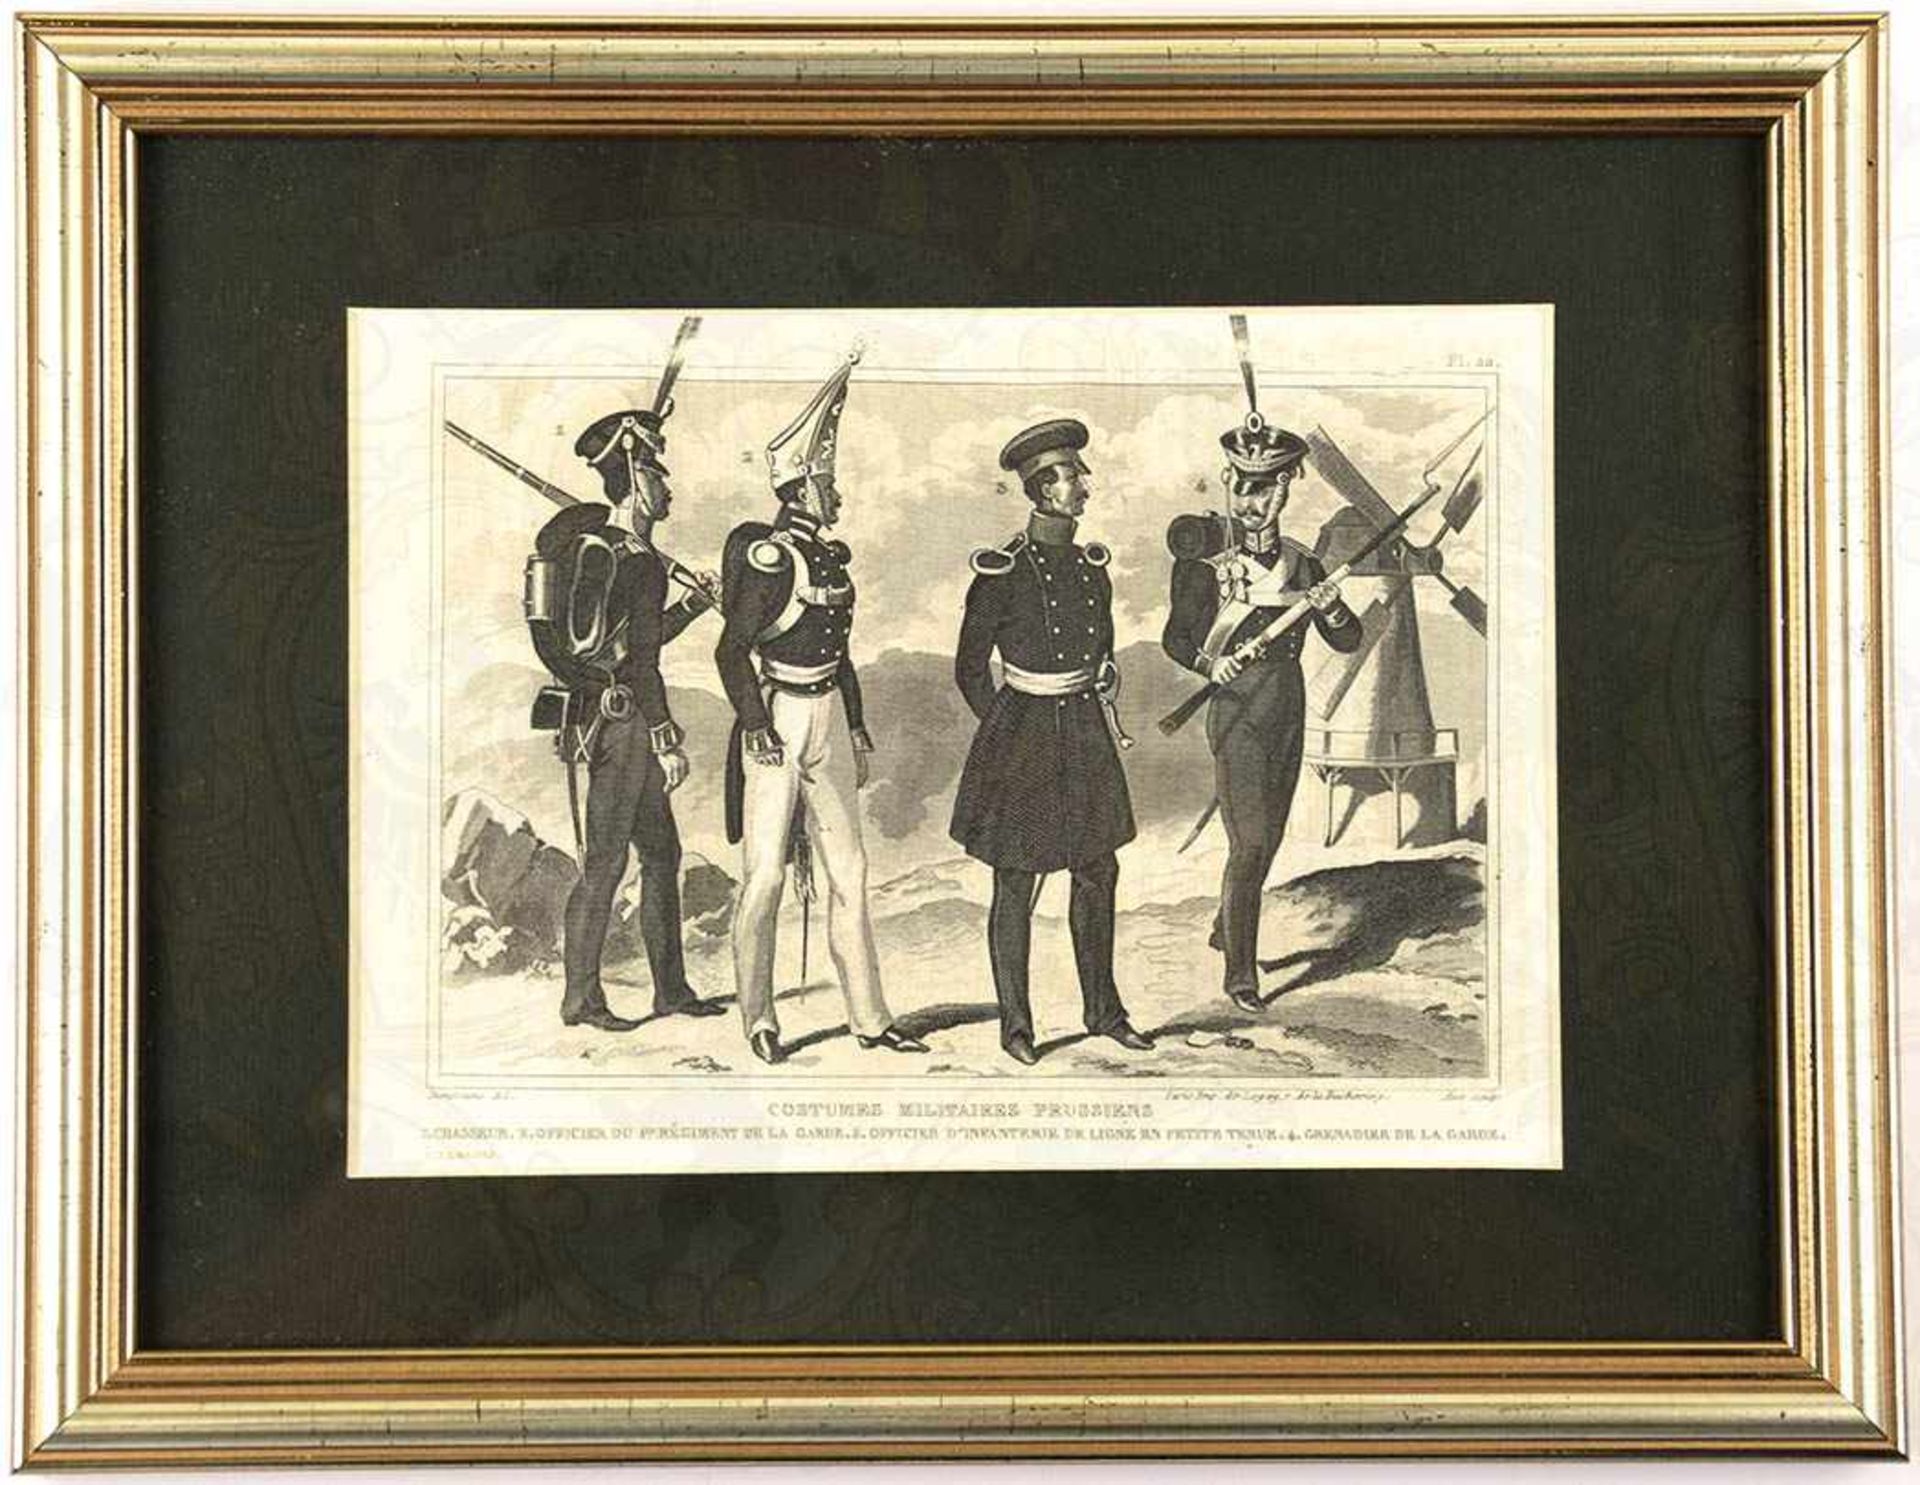 STICH, Uniform d. preuß. Infanterie, Paris um 1830, 16x10 cm, neuzeitl. gerahmt